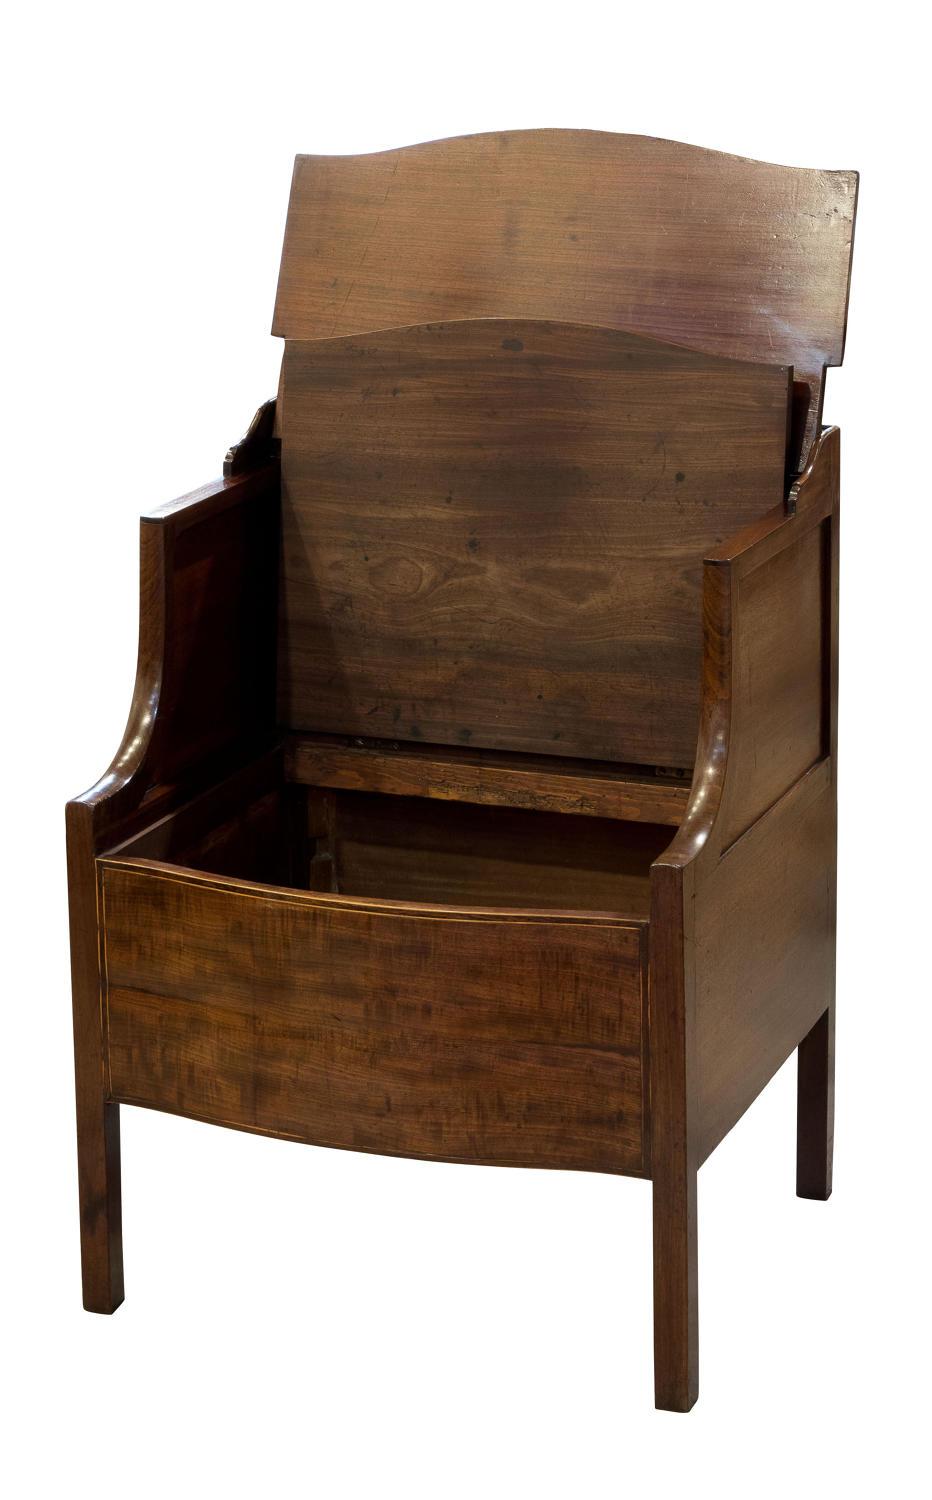 Georgian mahogany commode

(bedside or telephone table)
circa 1780.